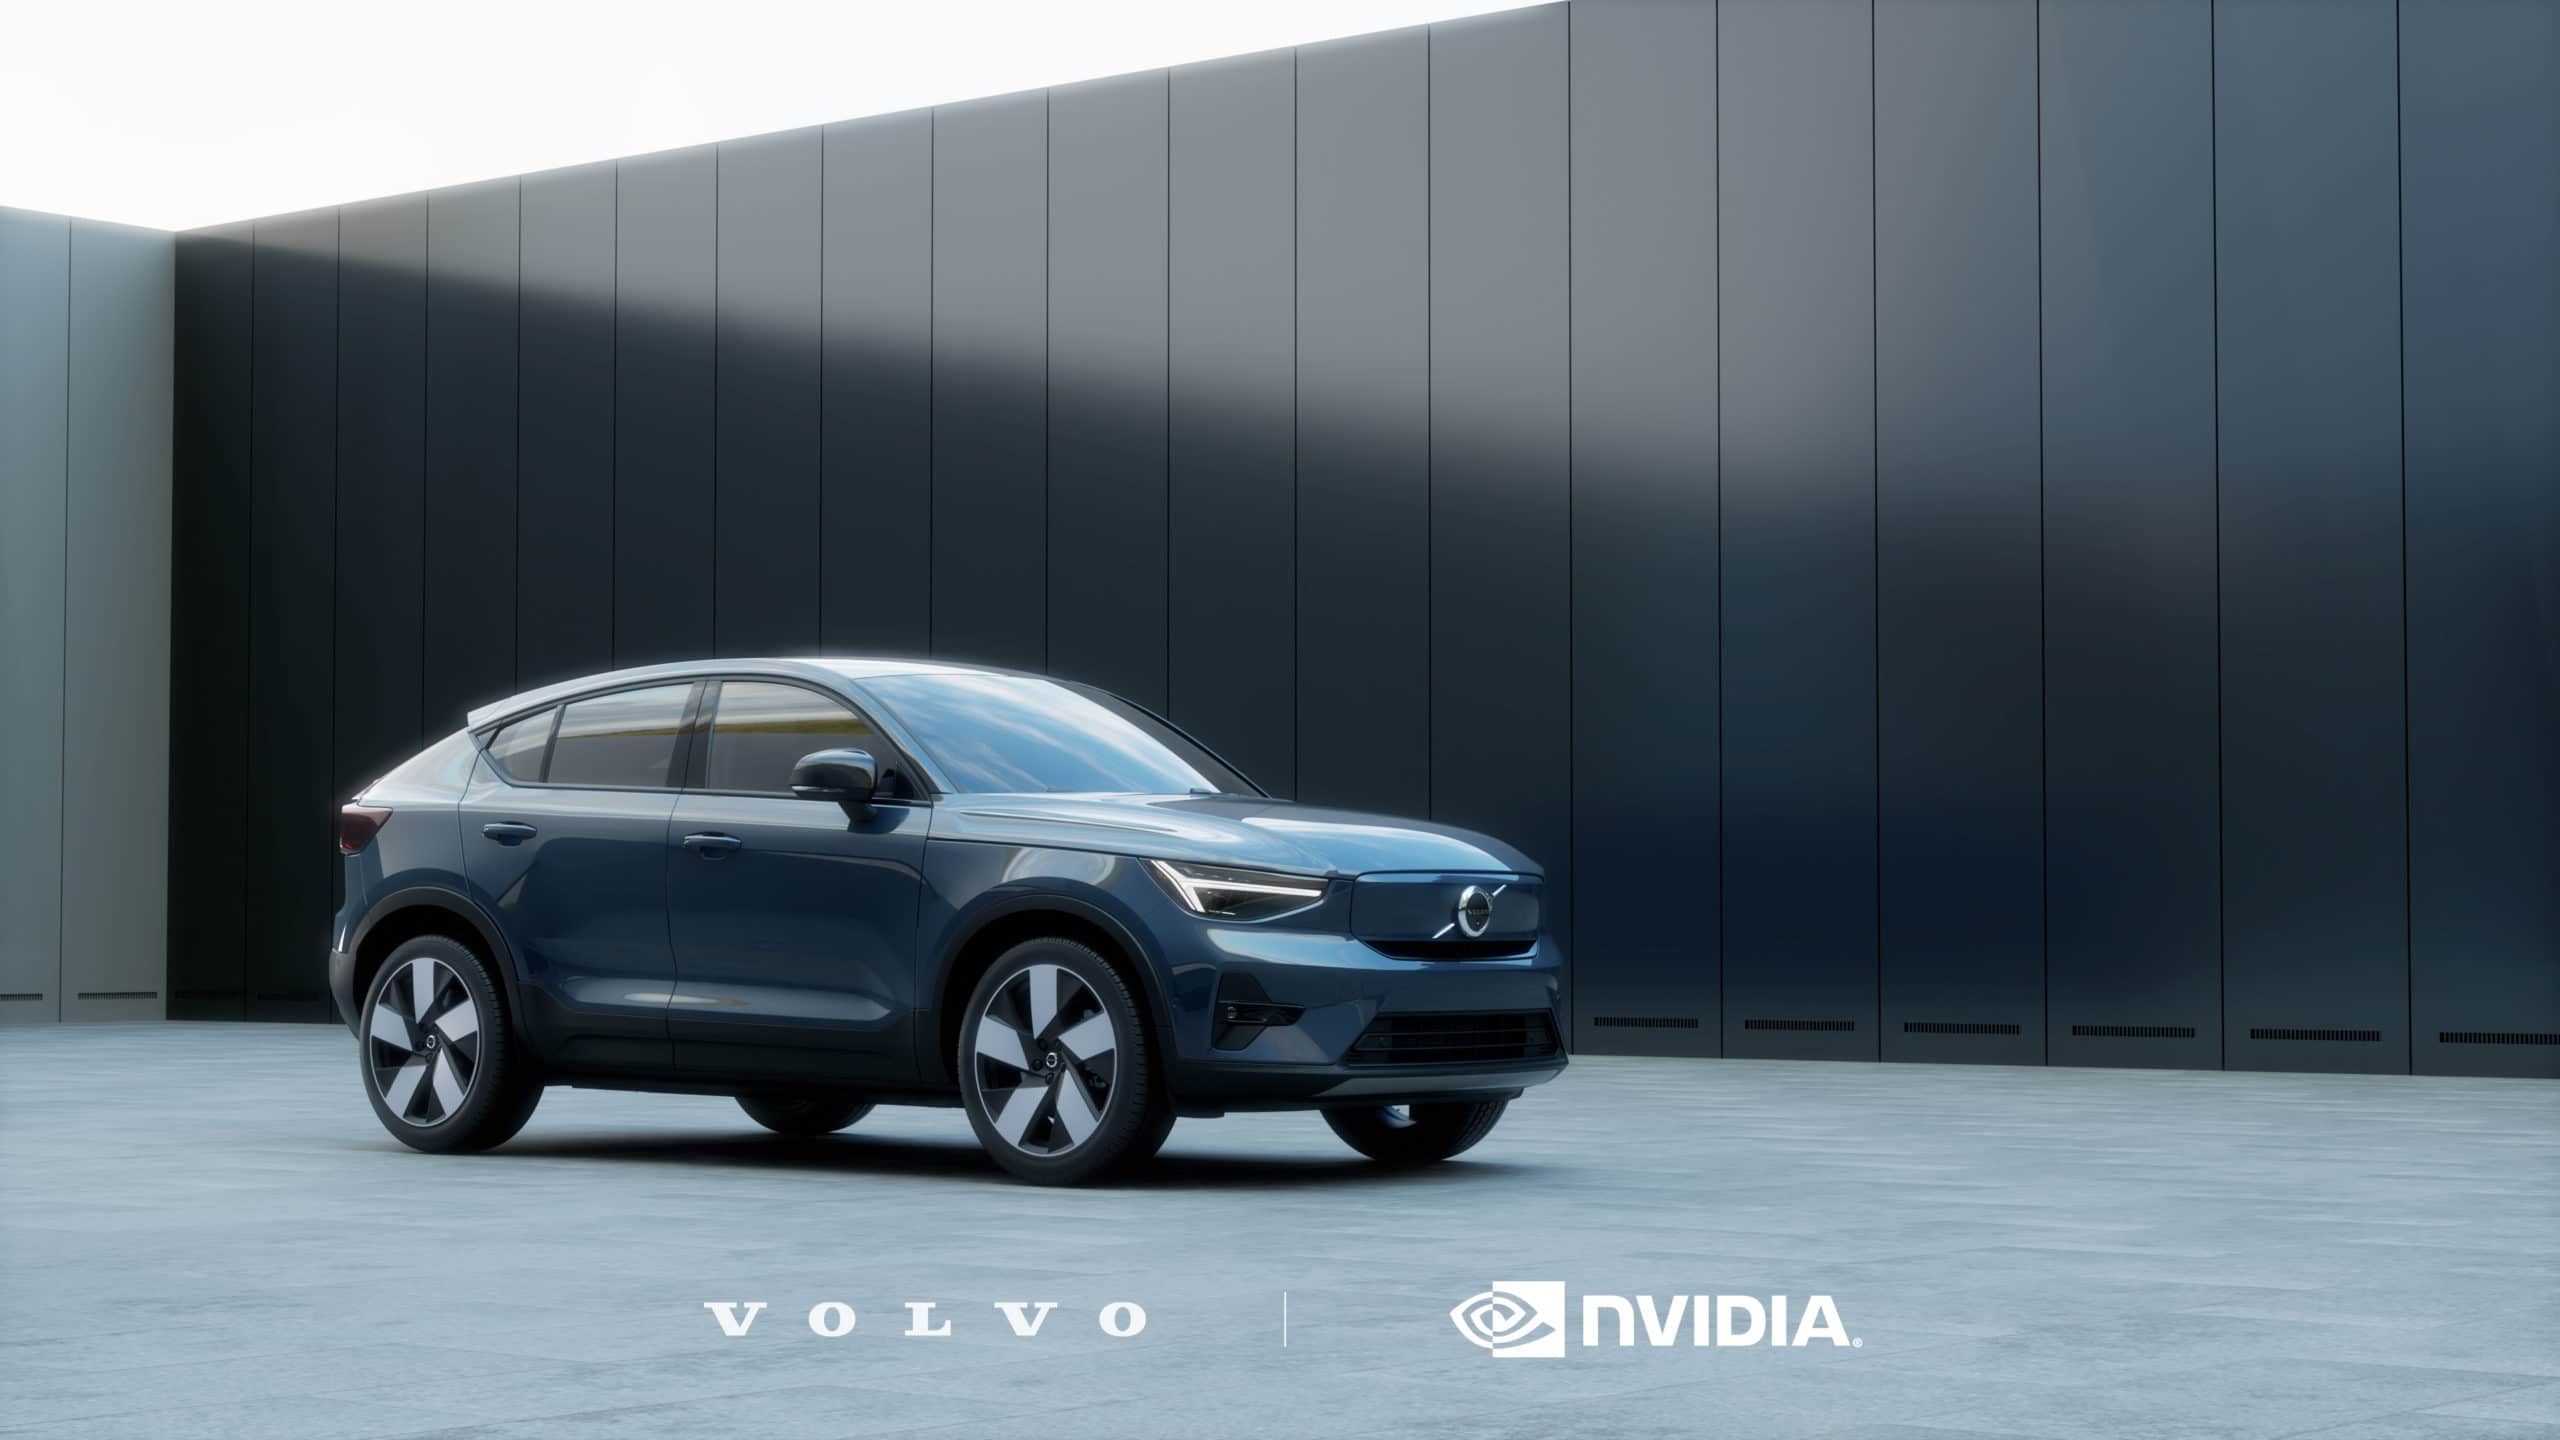 Nvidia kooperiert unter anderem mit Volvo